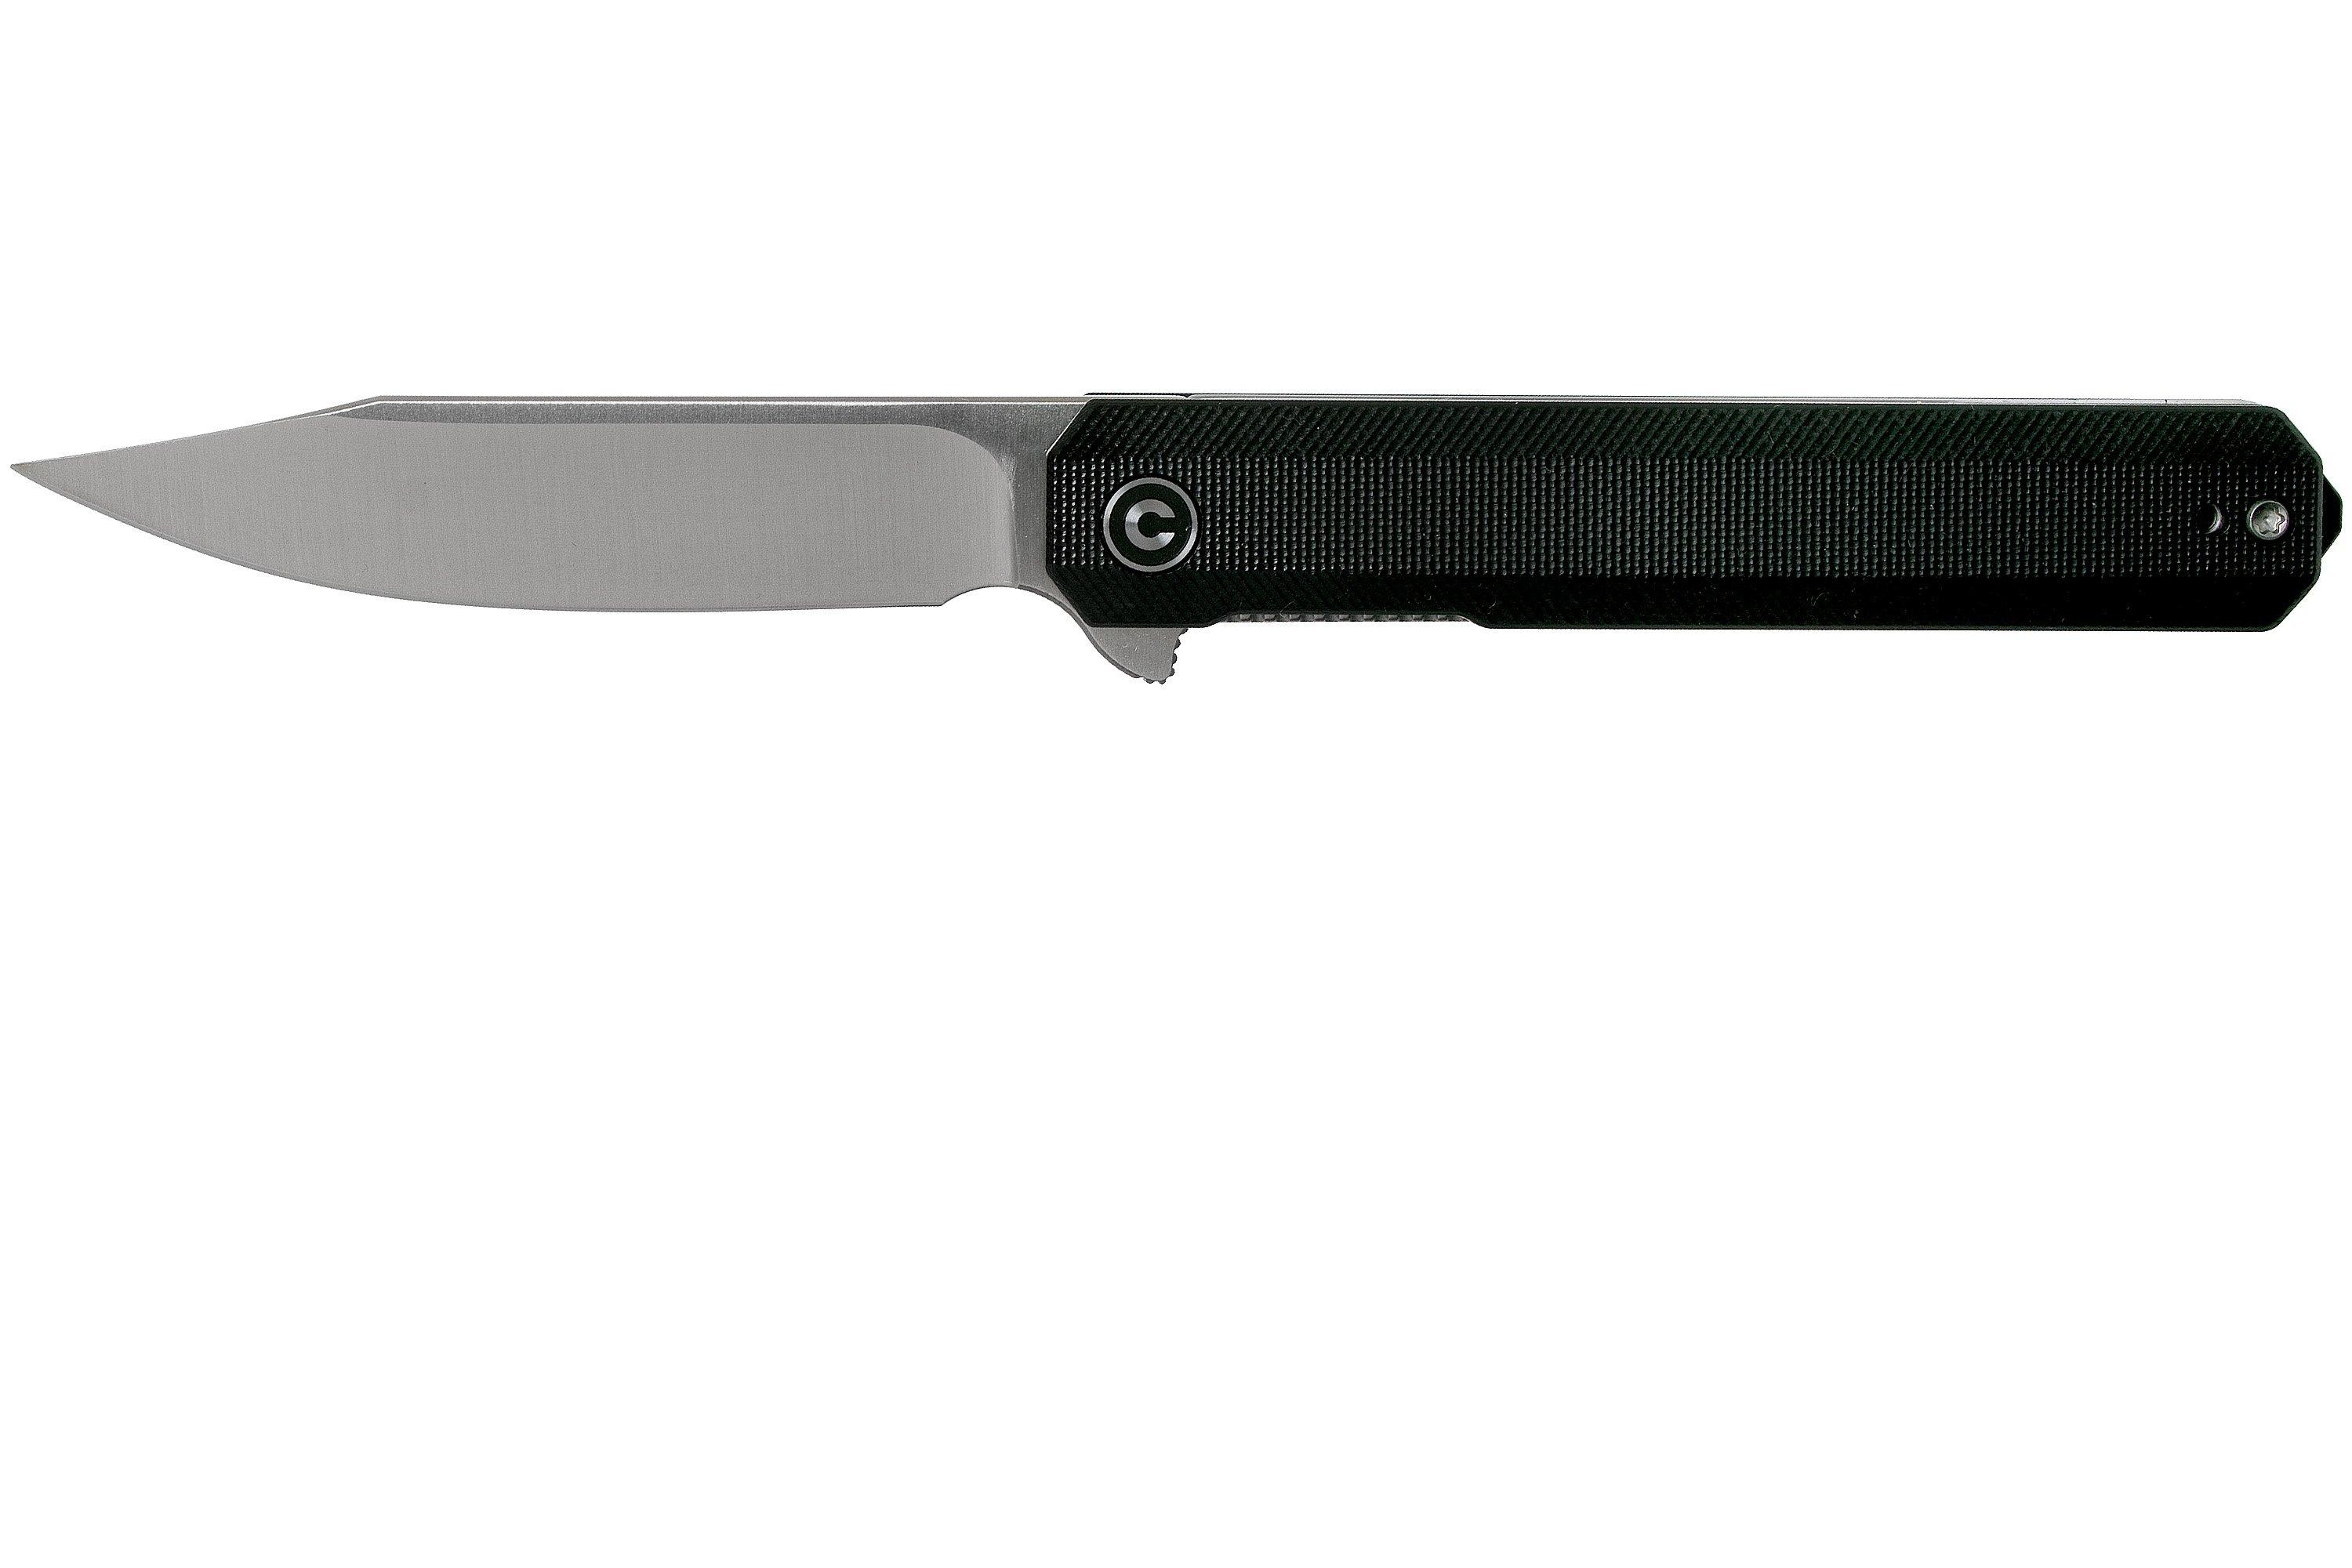 Civivi Chronic C917C Black G10 pocket knife | Advantageously 